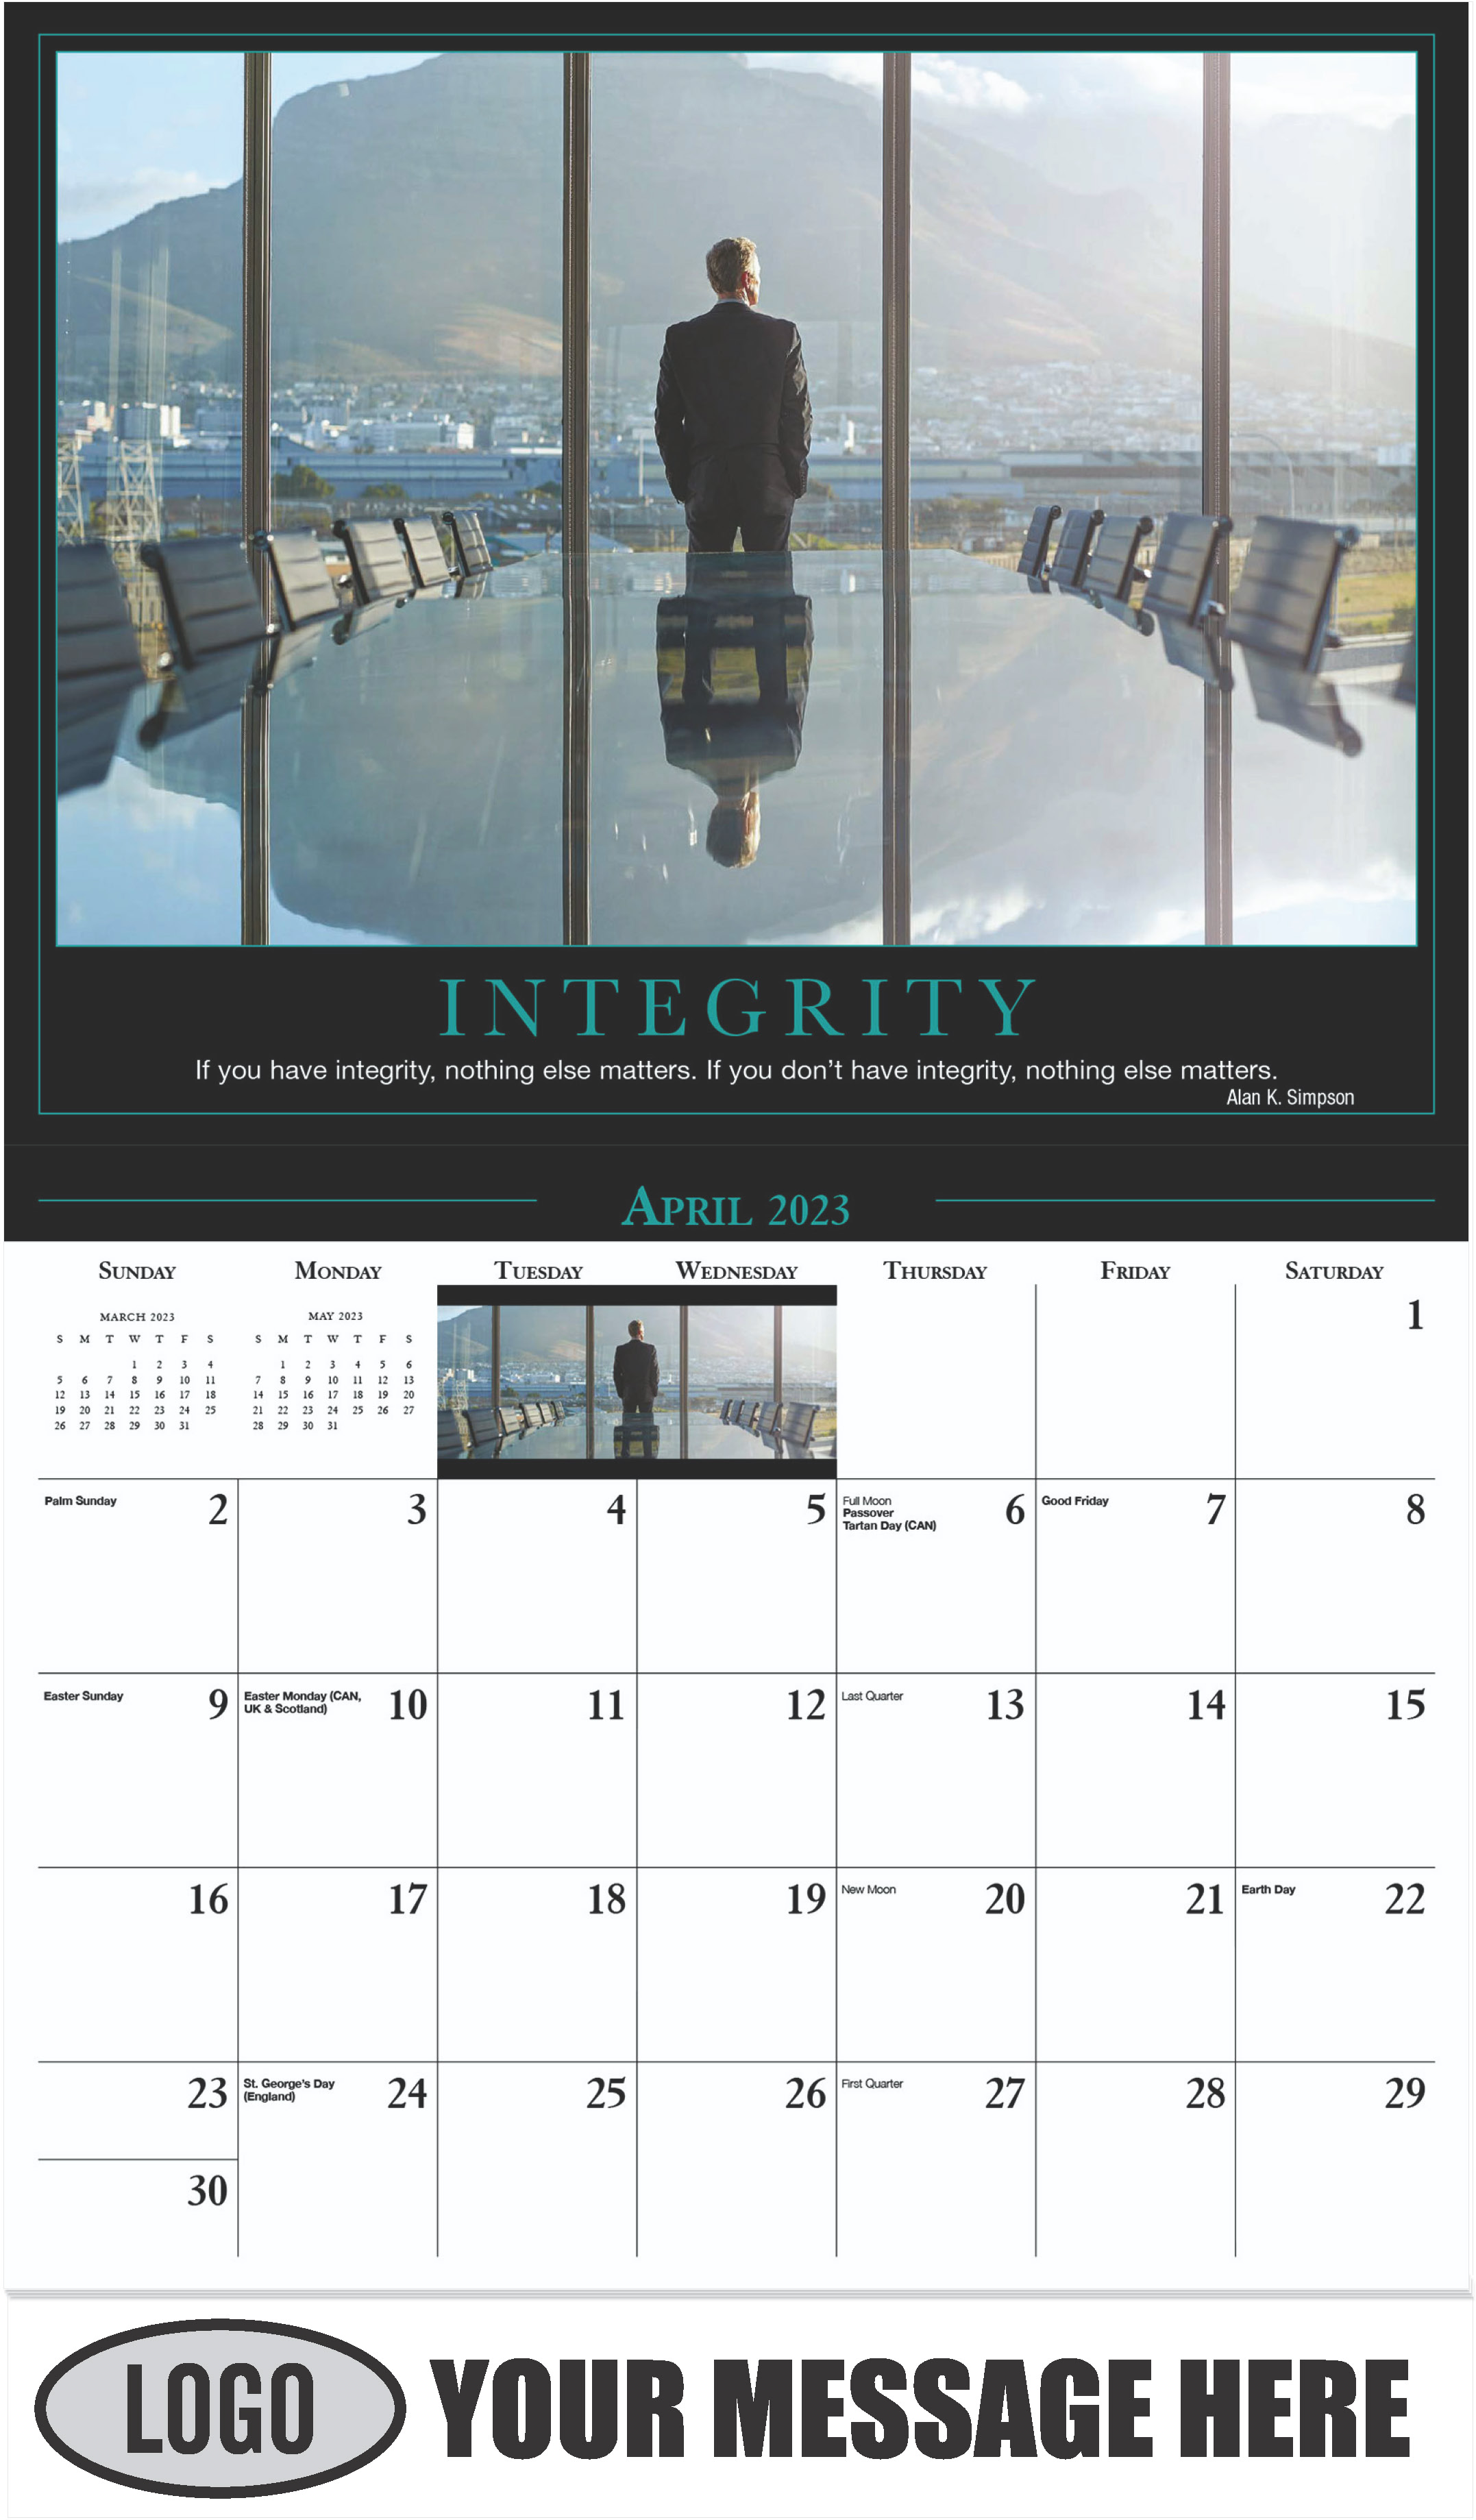 INTEGRITY ''If you have integrity, nothing else matters. If you don't have integrity, nothing else matters.'' - Alan K. Simpson - April - Motivation 2023 Promotional Calendar